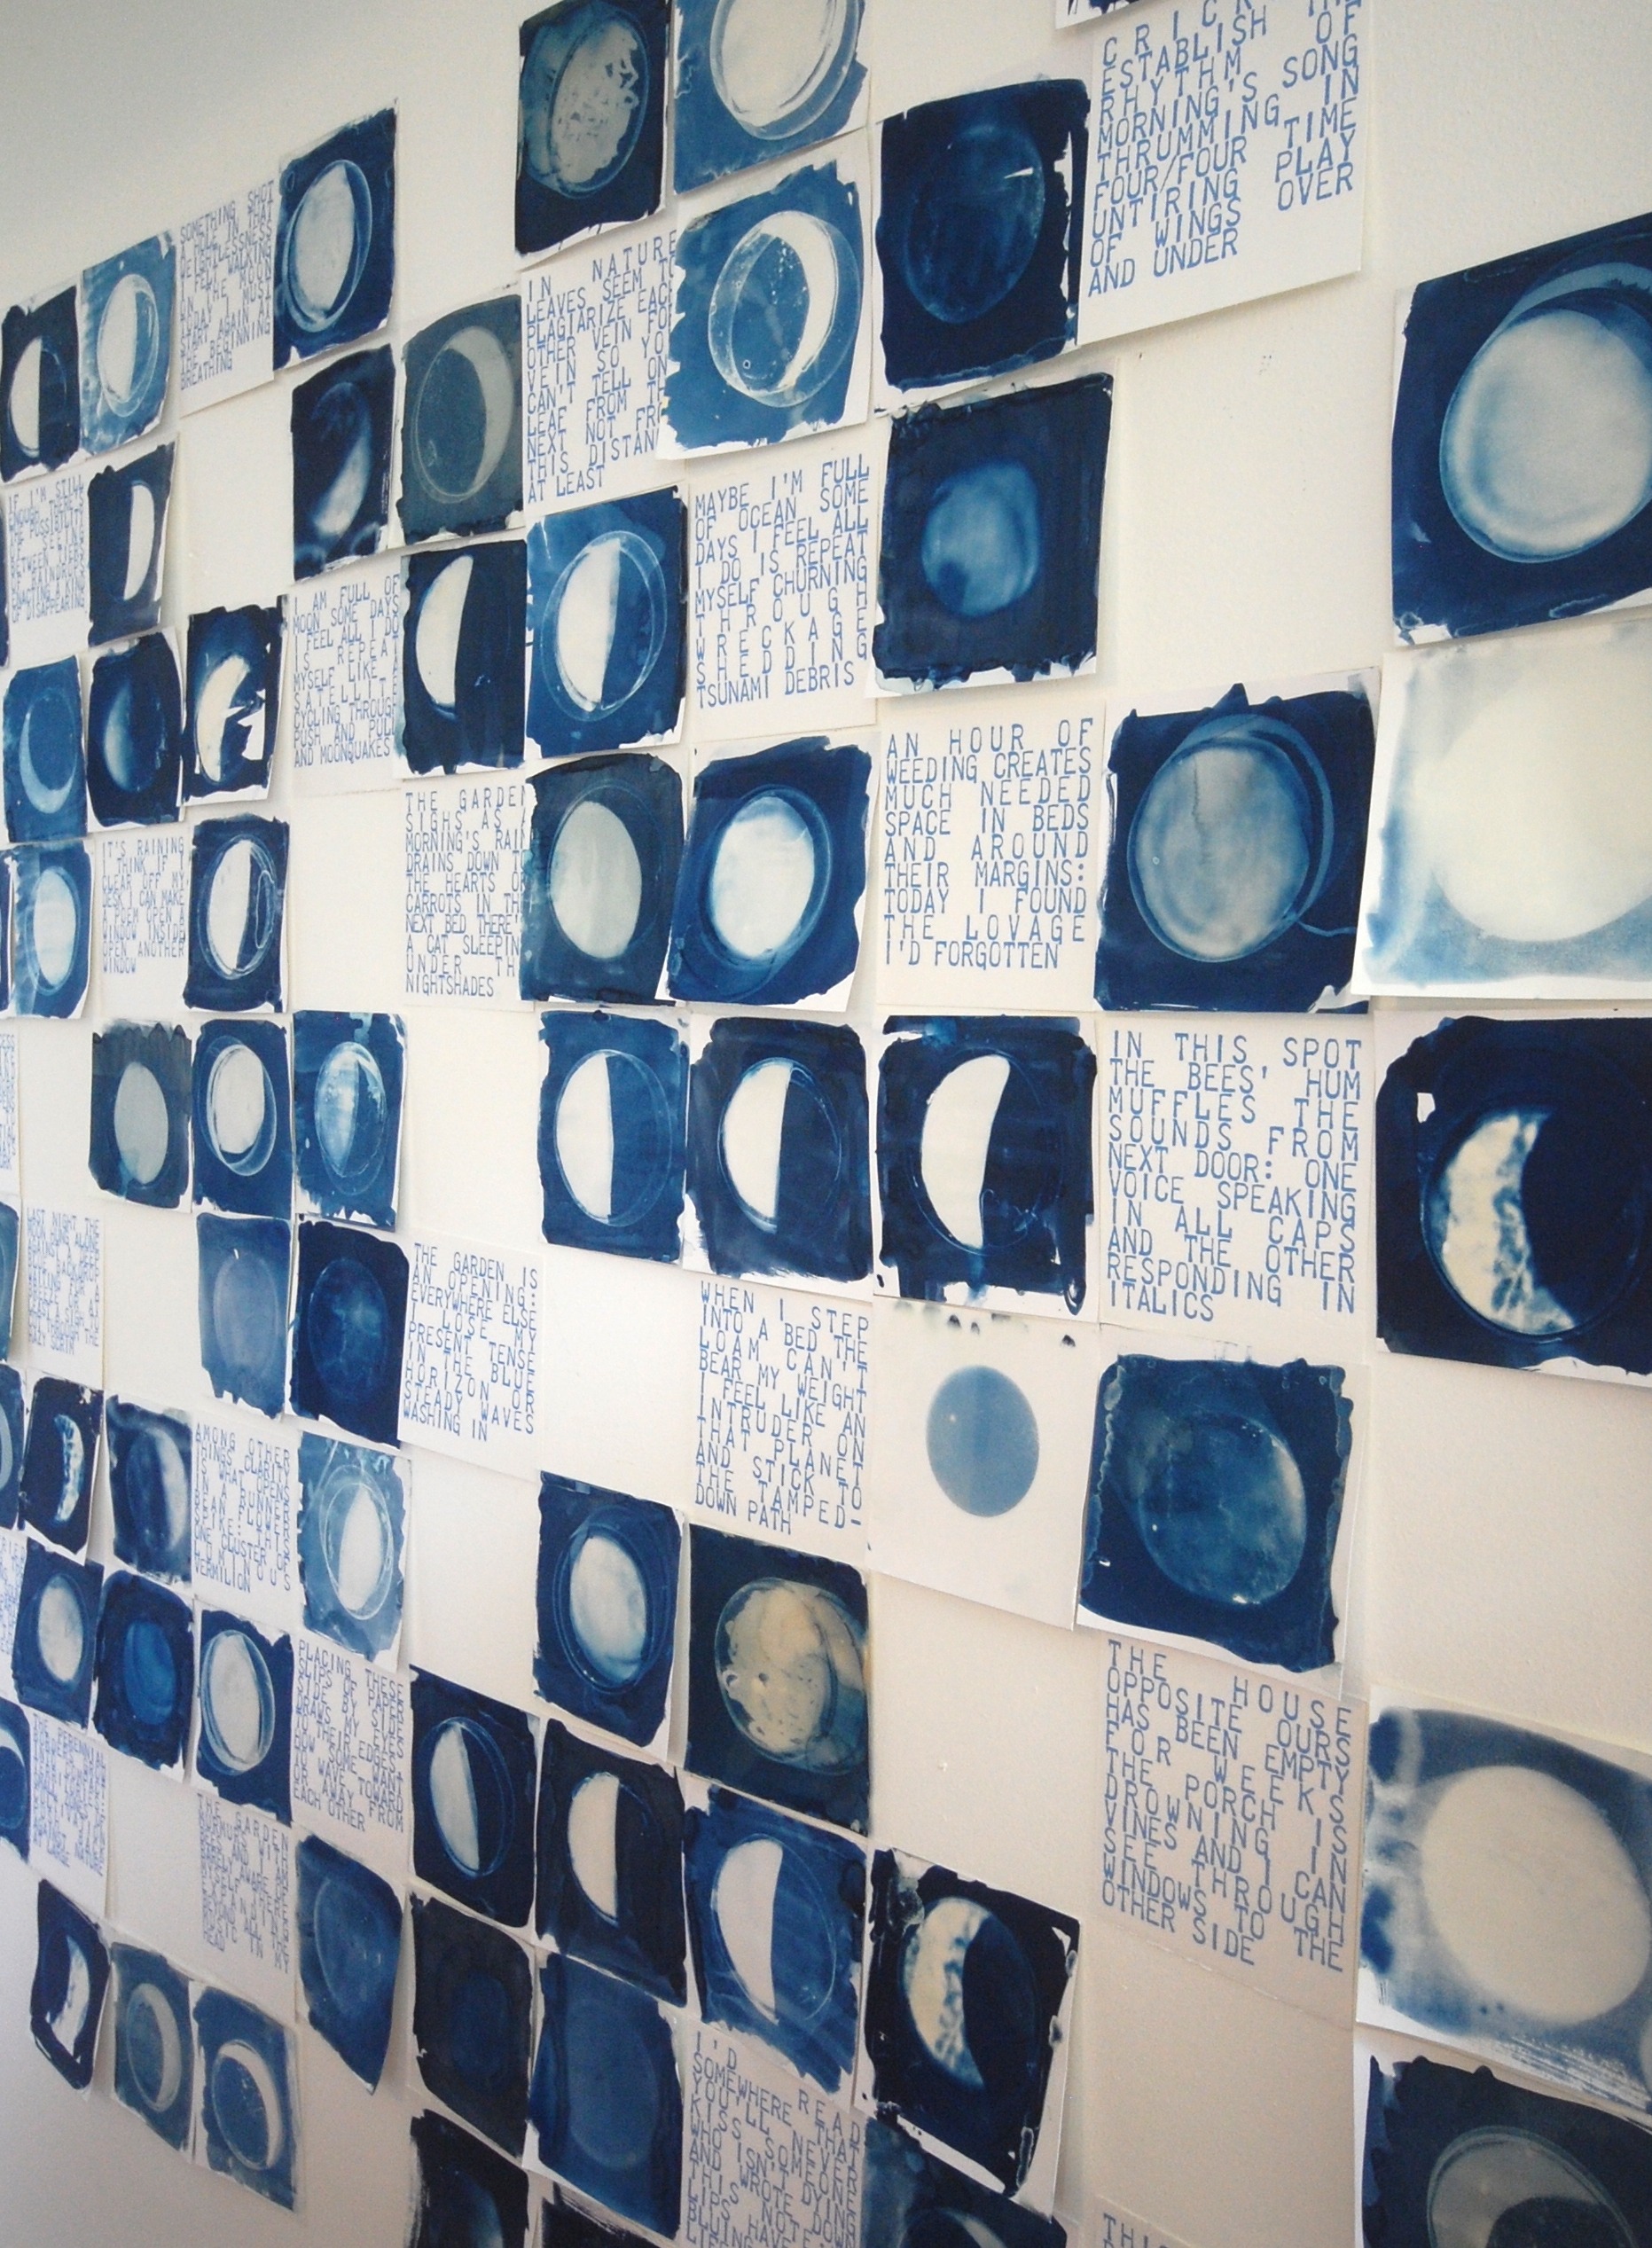 Dozens of cyanotype prints and tanka poems by Heidi Reszies arranged on a white wall